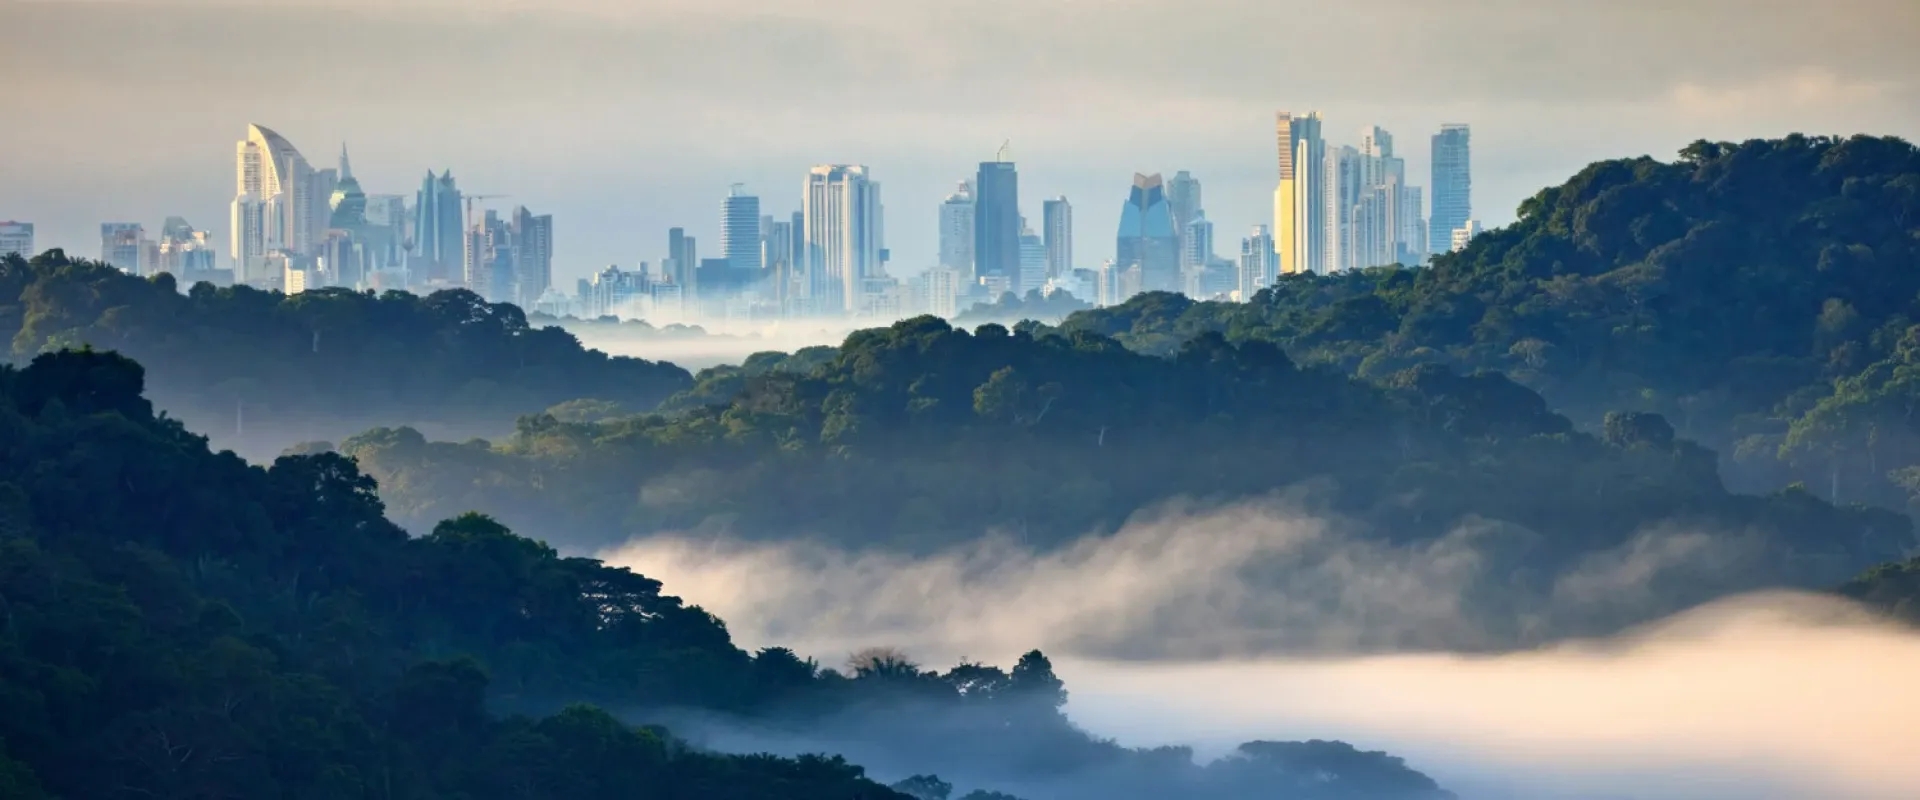 Panama City, Panama, skyline behind rolling hills and a dense fog